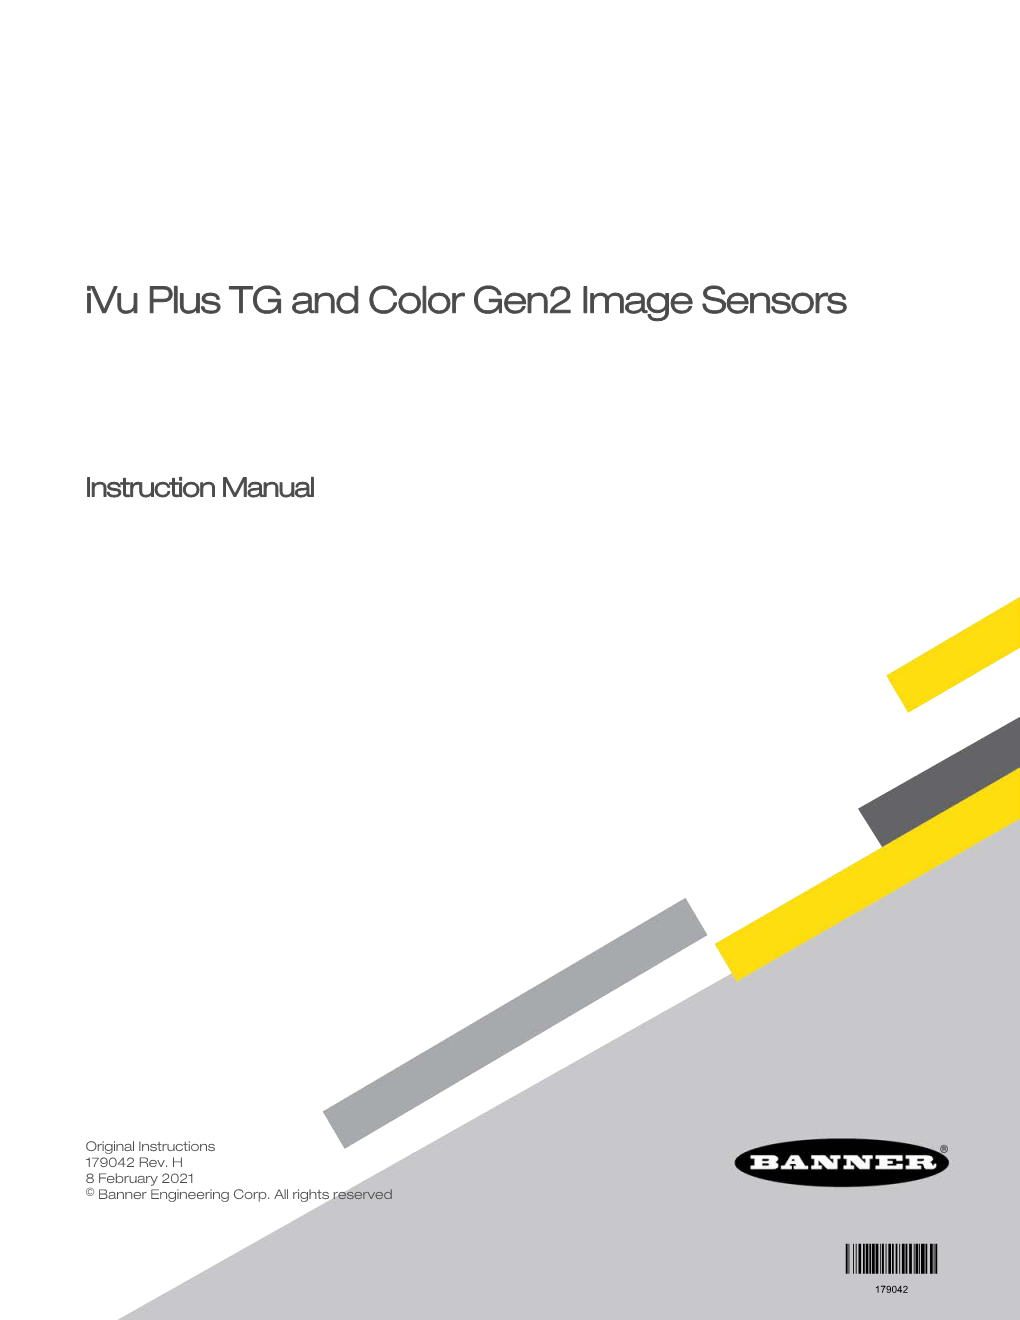 Ivu Plus TG and Color Gen2 Image Sensors Instruction Manual